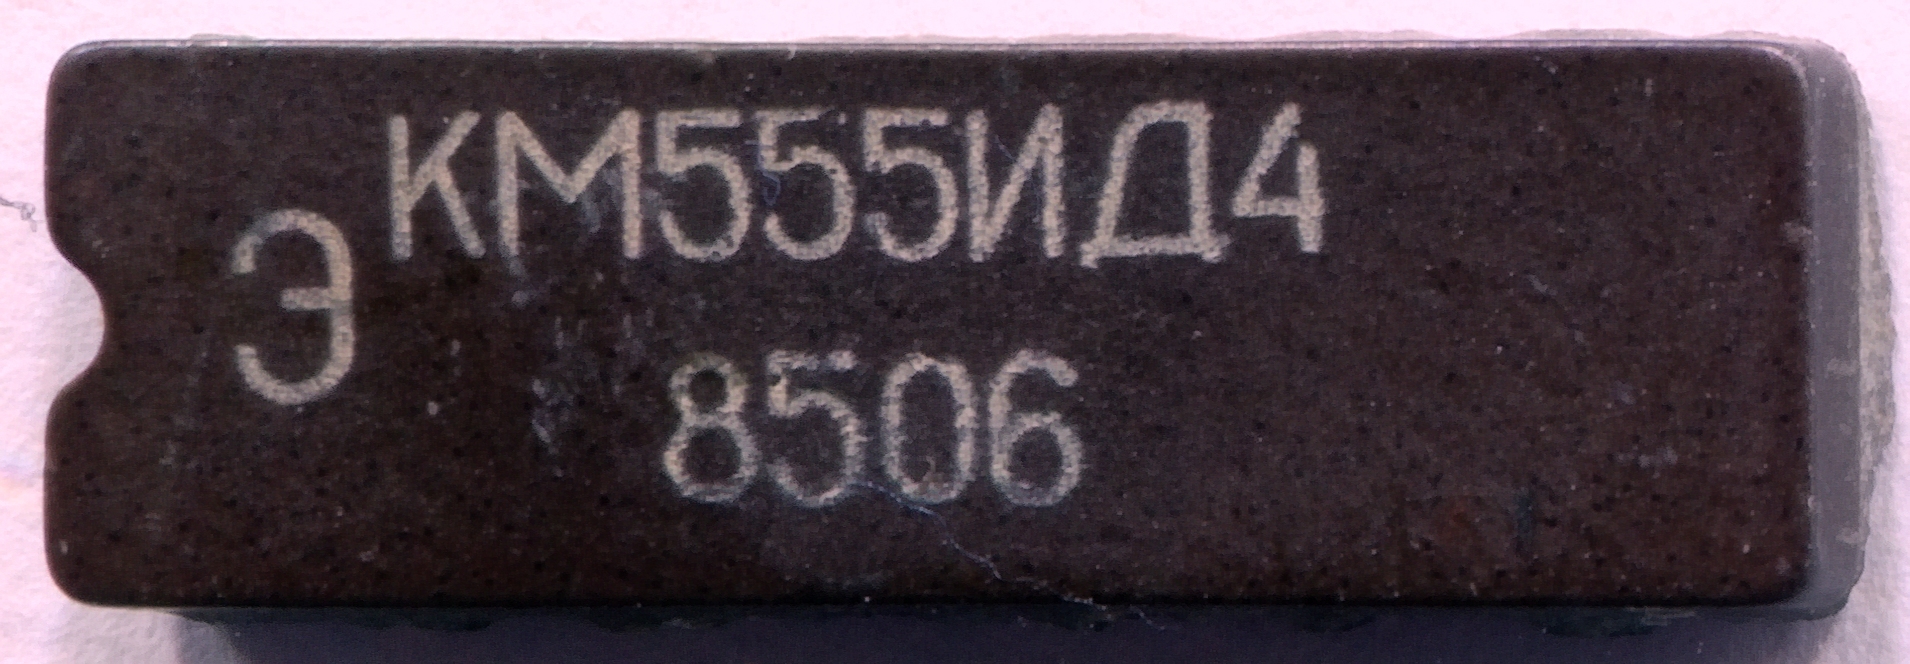 КМ555ИД4 85 0 М